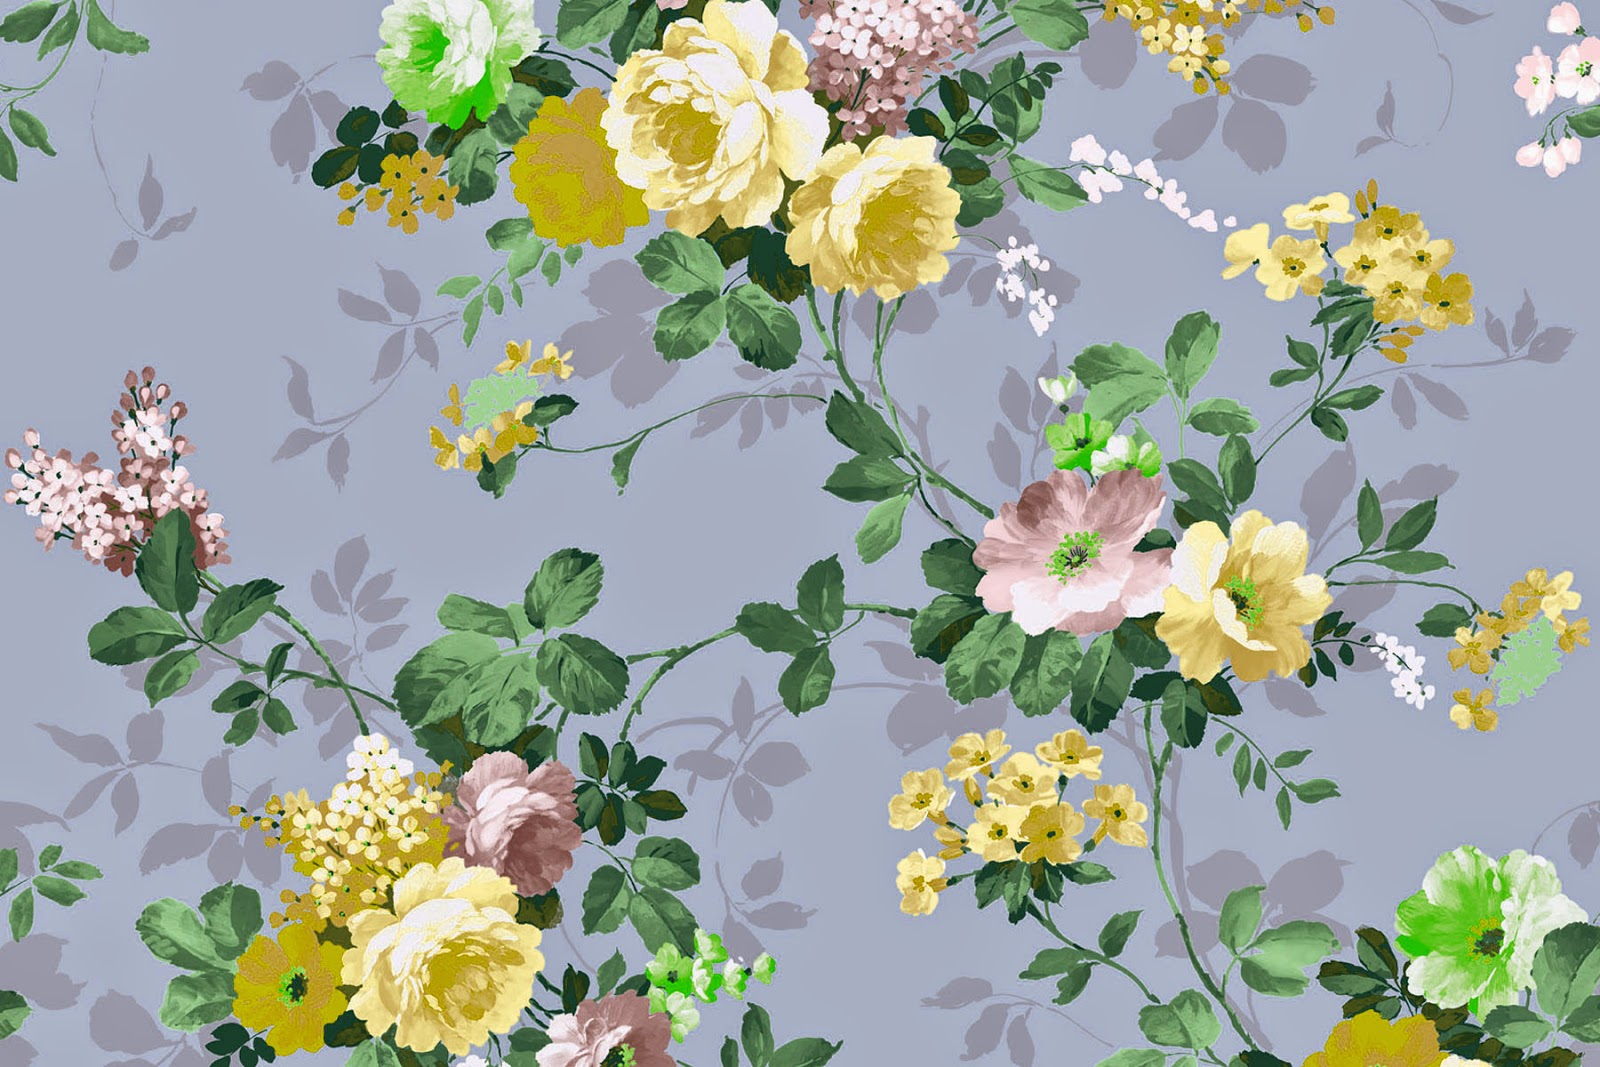 floral wallpaper,flower,floral design,plant,yellow,rose